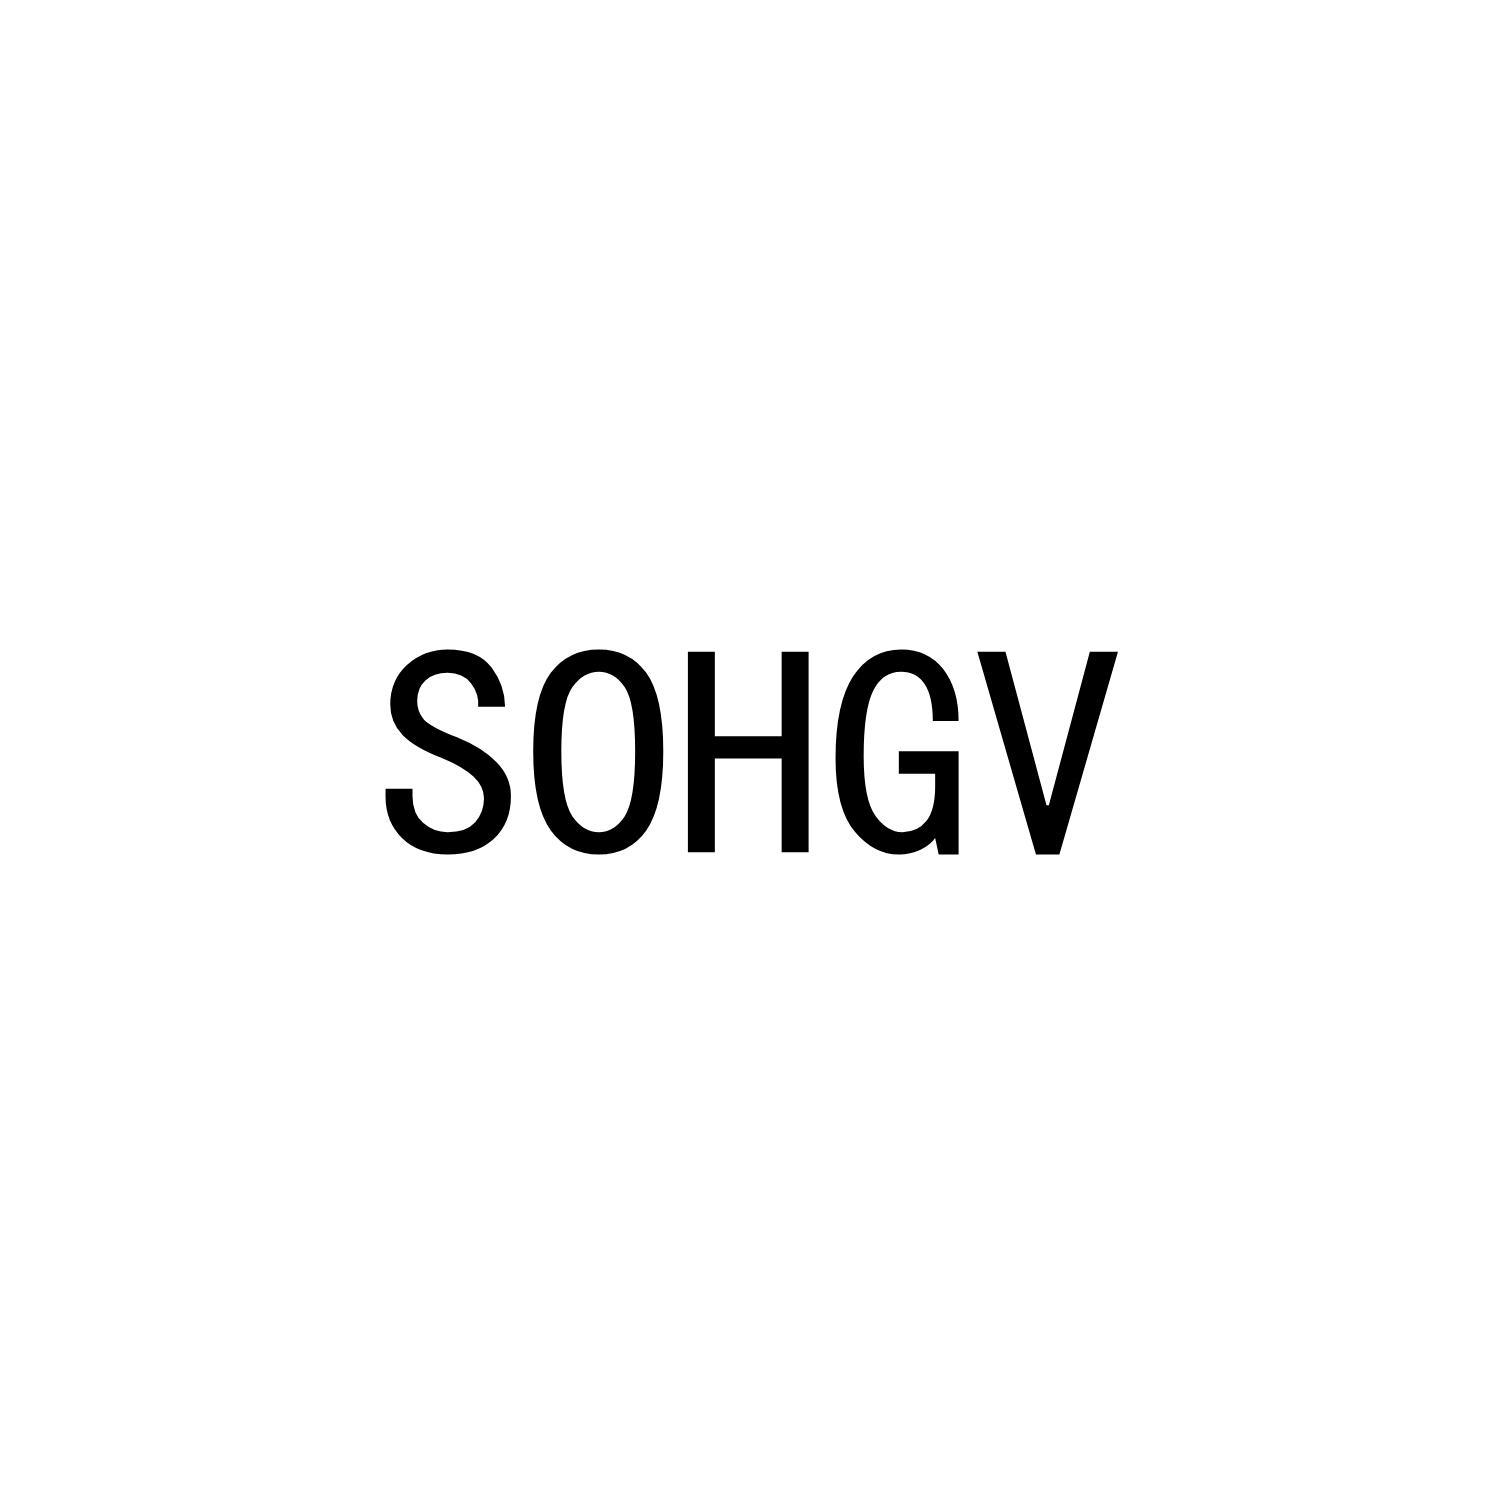 SOHGV